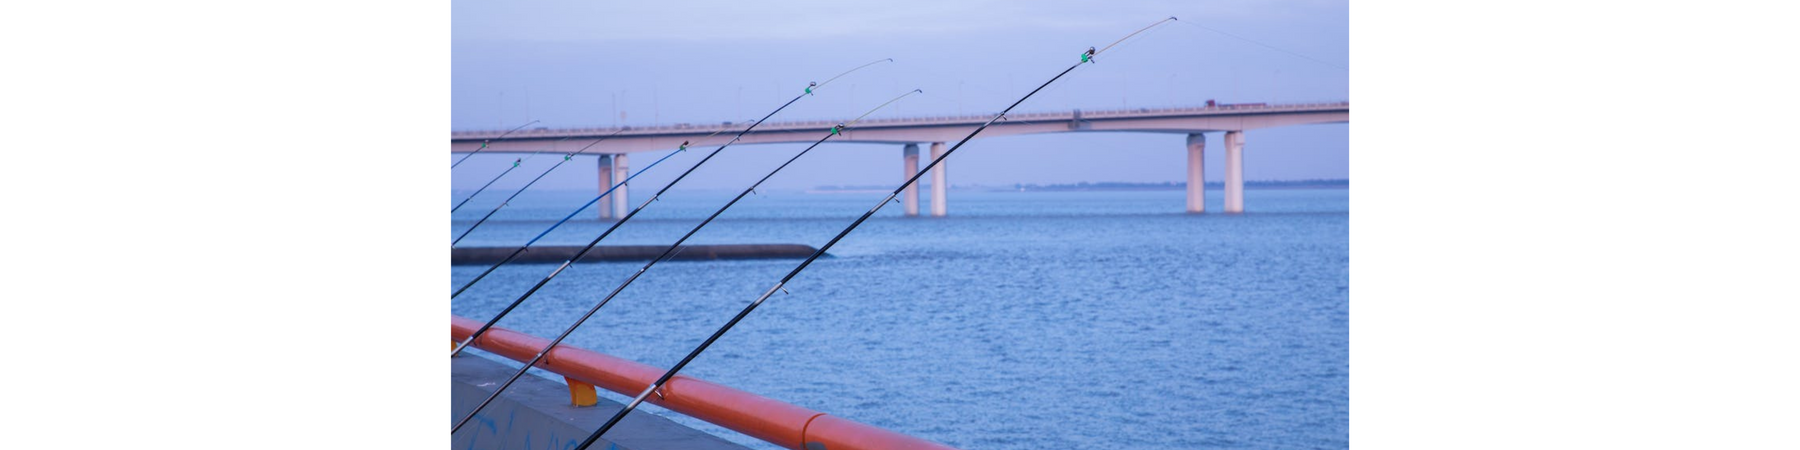 BEGINNER’S GUIDE: Types of Fishing Rods